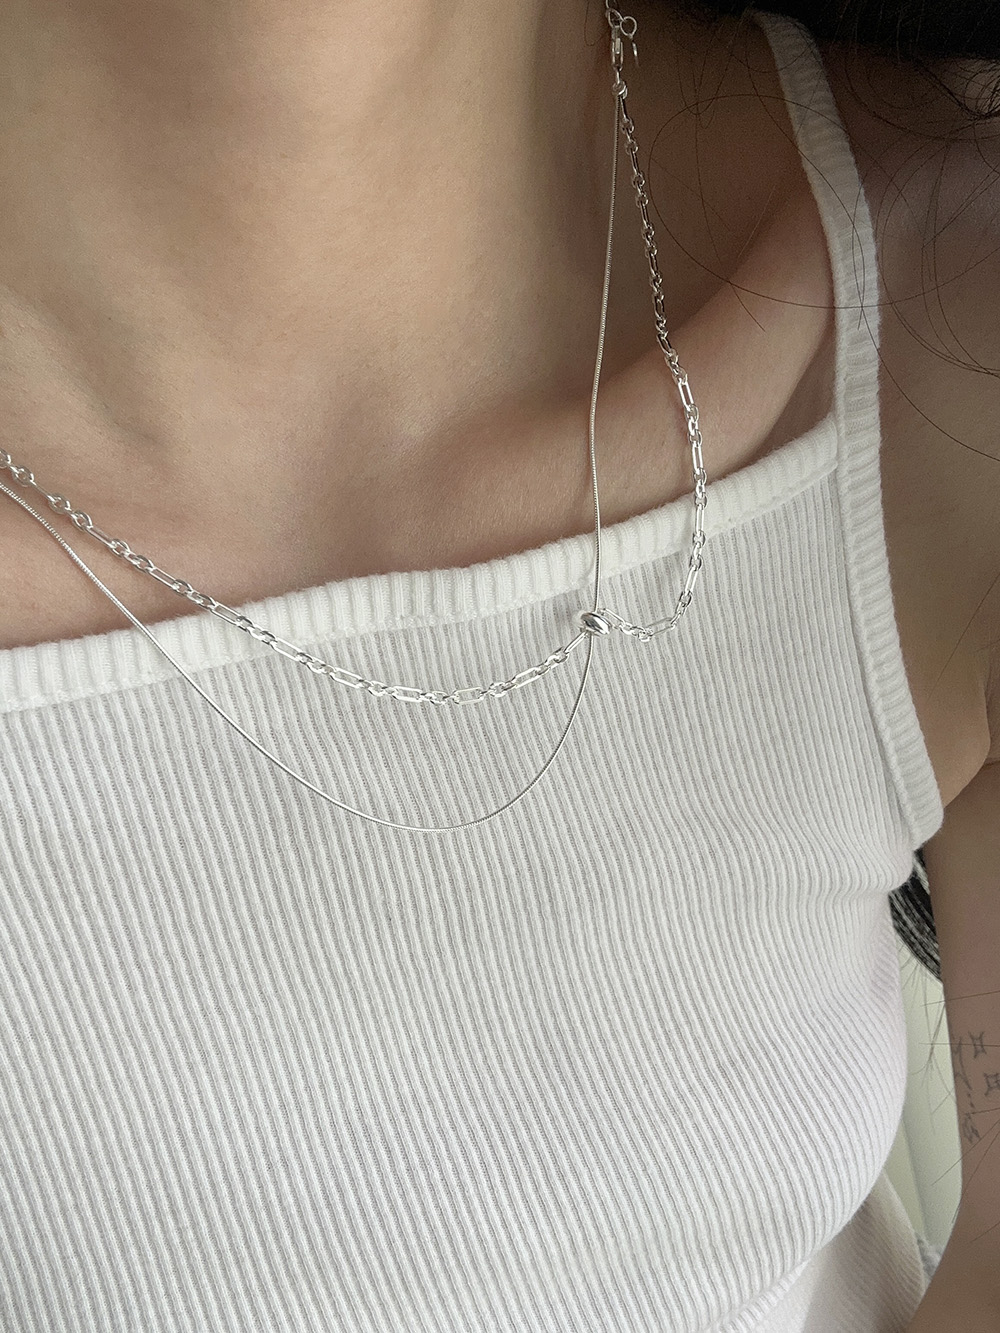 [92.5 silver] Move necklace (2color)